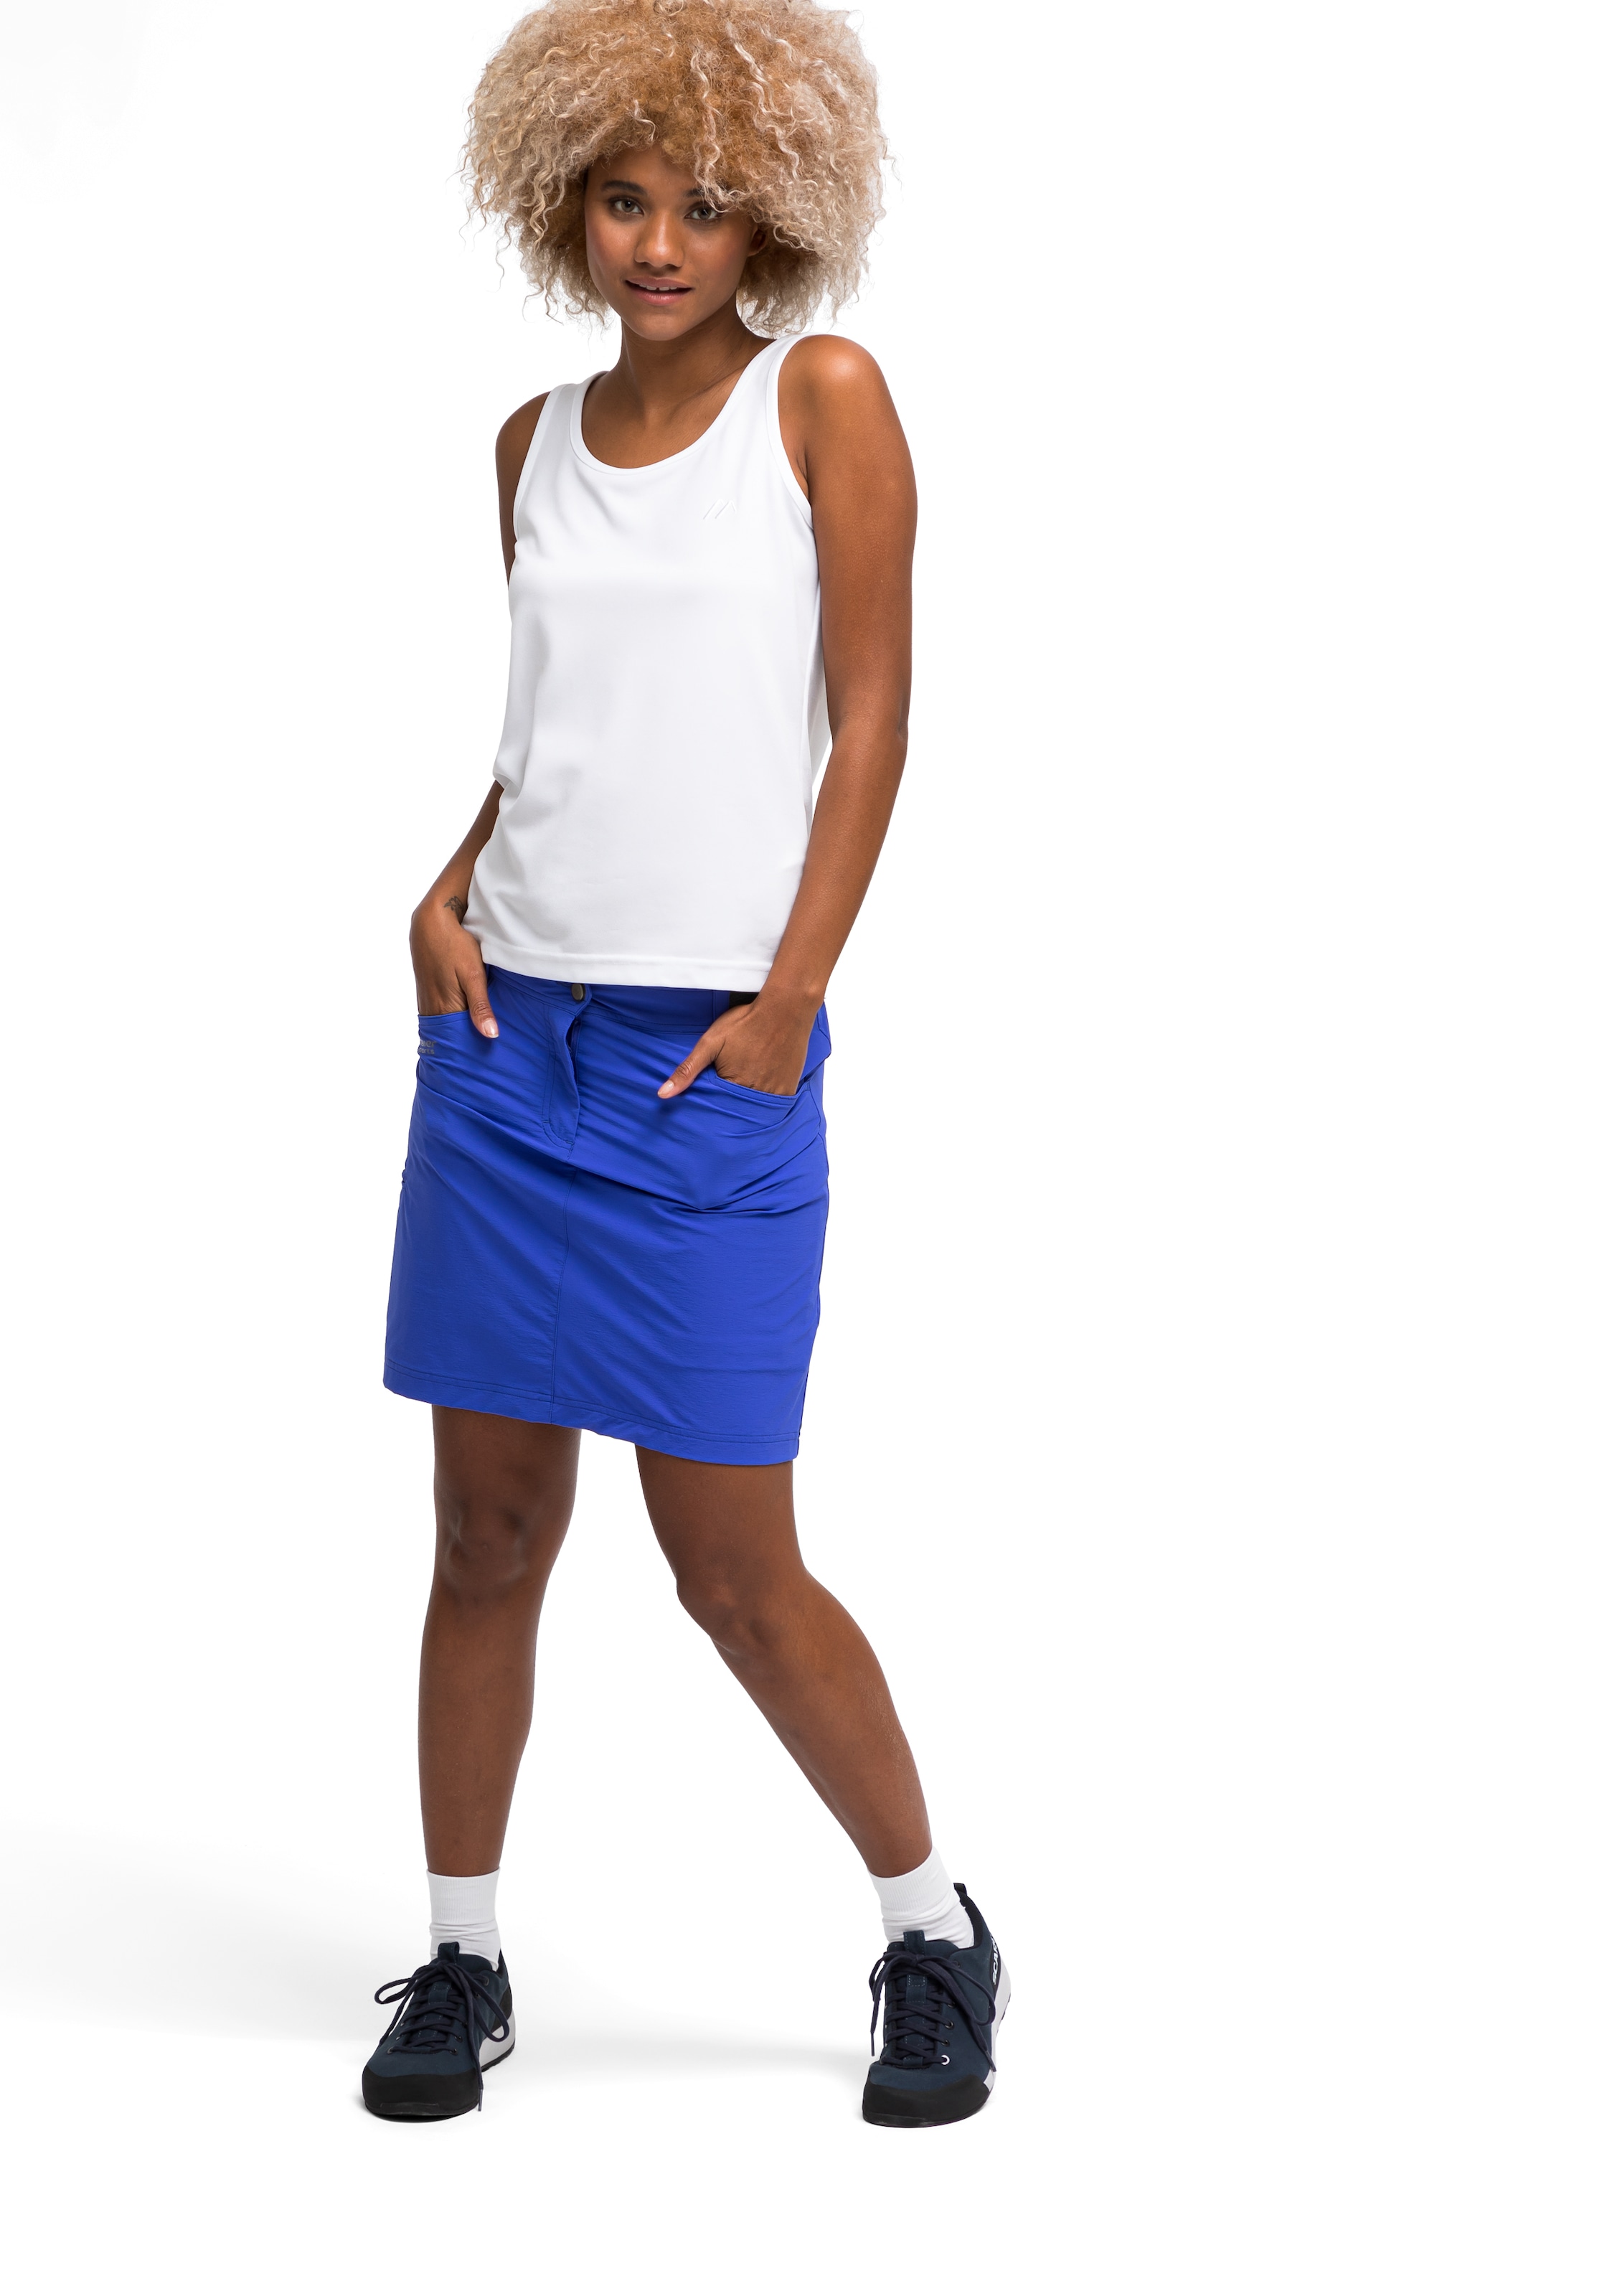 kaufen Damen und Funktionsshirt Sport ärmelloses Maier für Sports Shirt Aktivitäten, Tank-Top »Petra«, Outdoor-